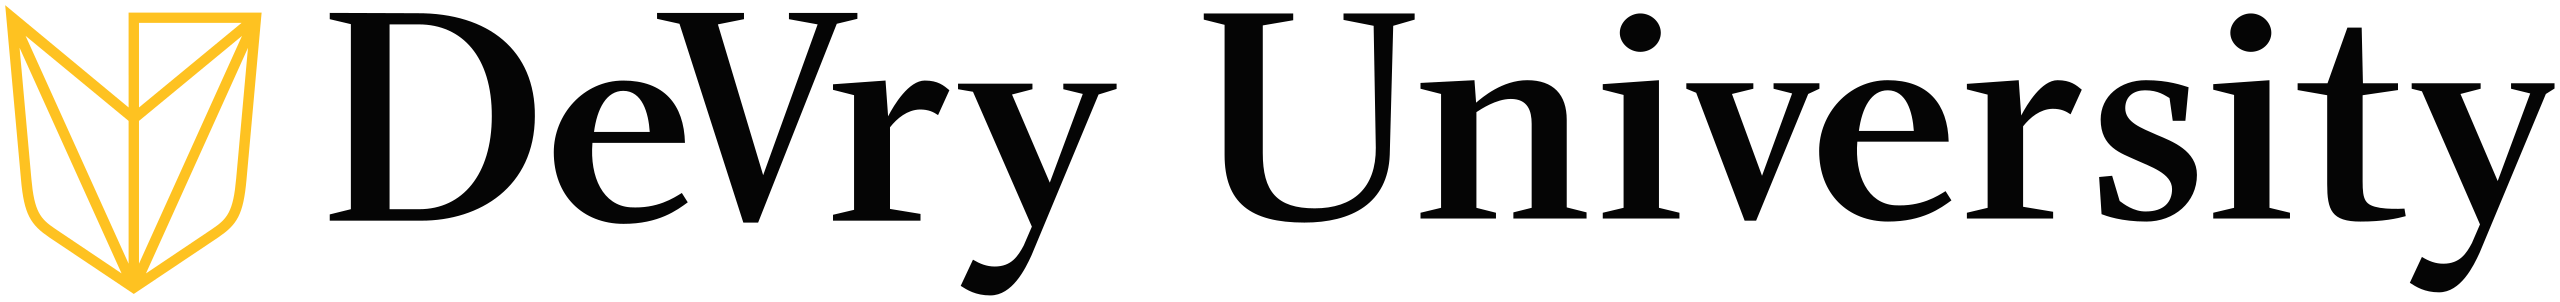 De-Vry University logo